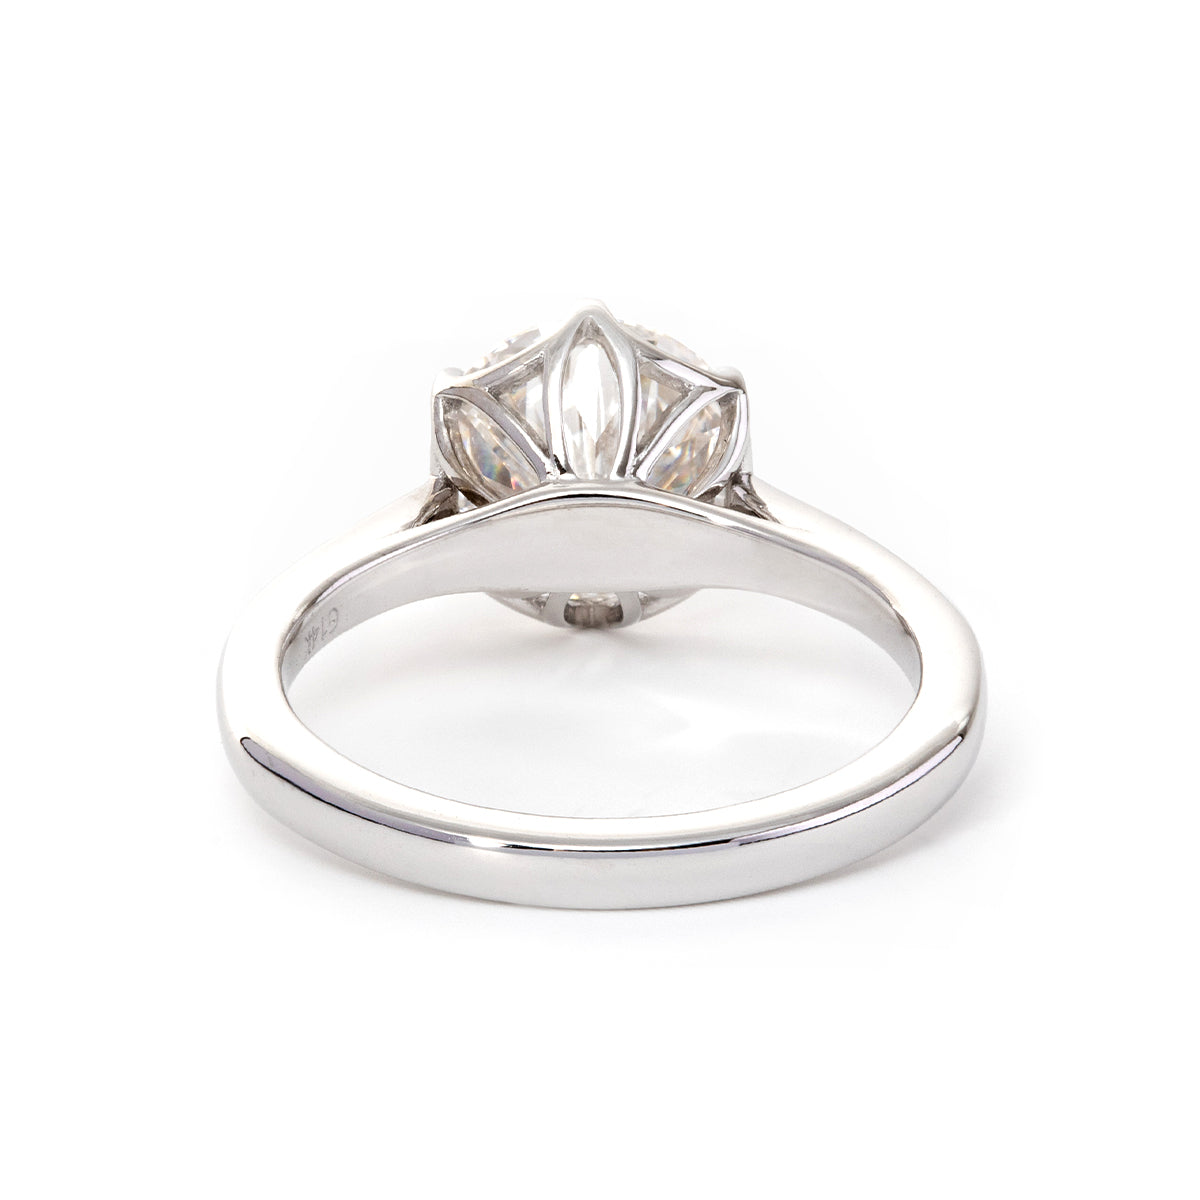 Transitional Cut  Diamond Flower Basket Solitaire Engagement Ring